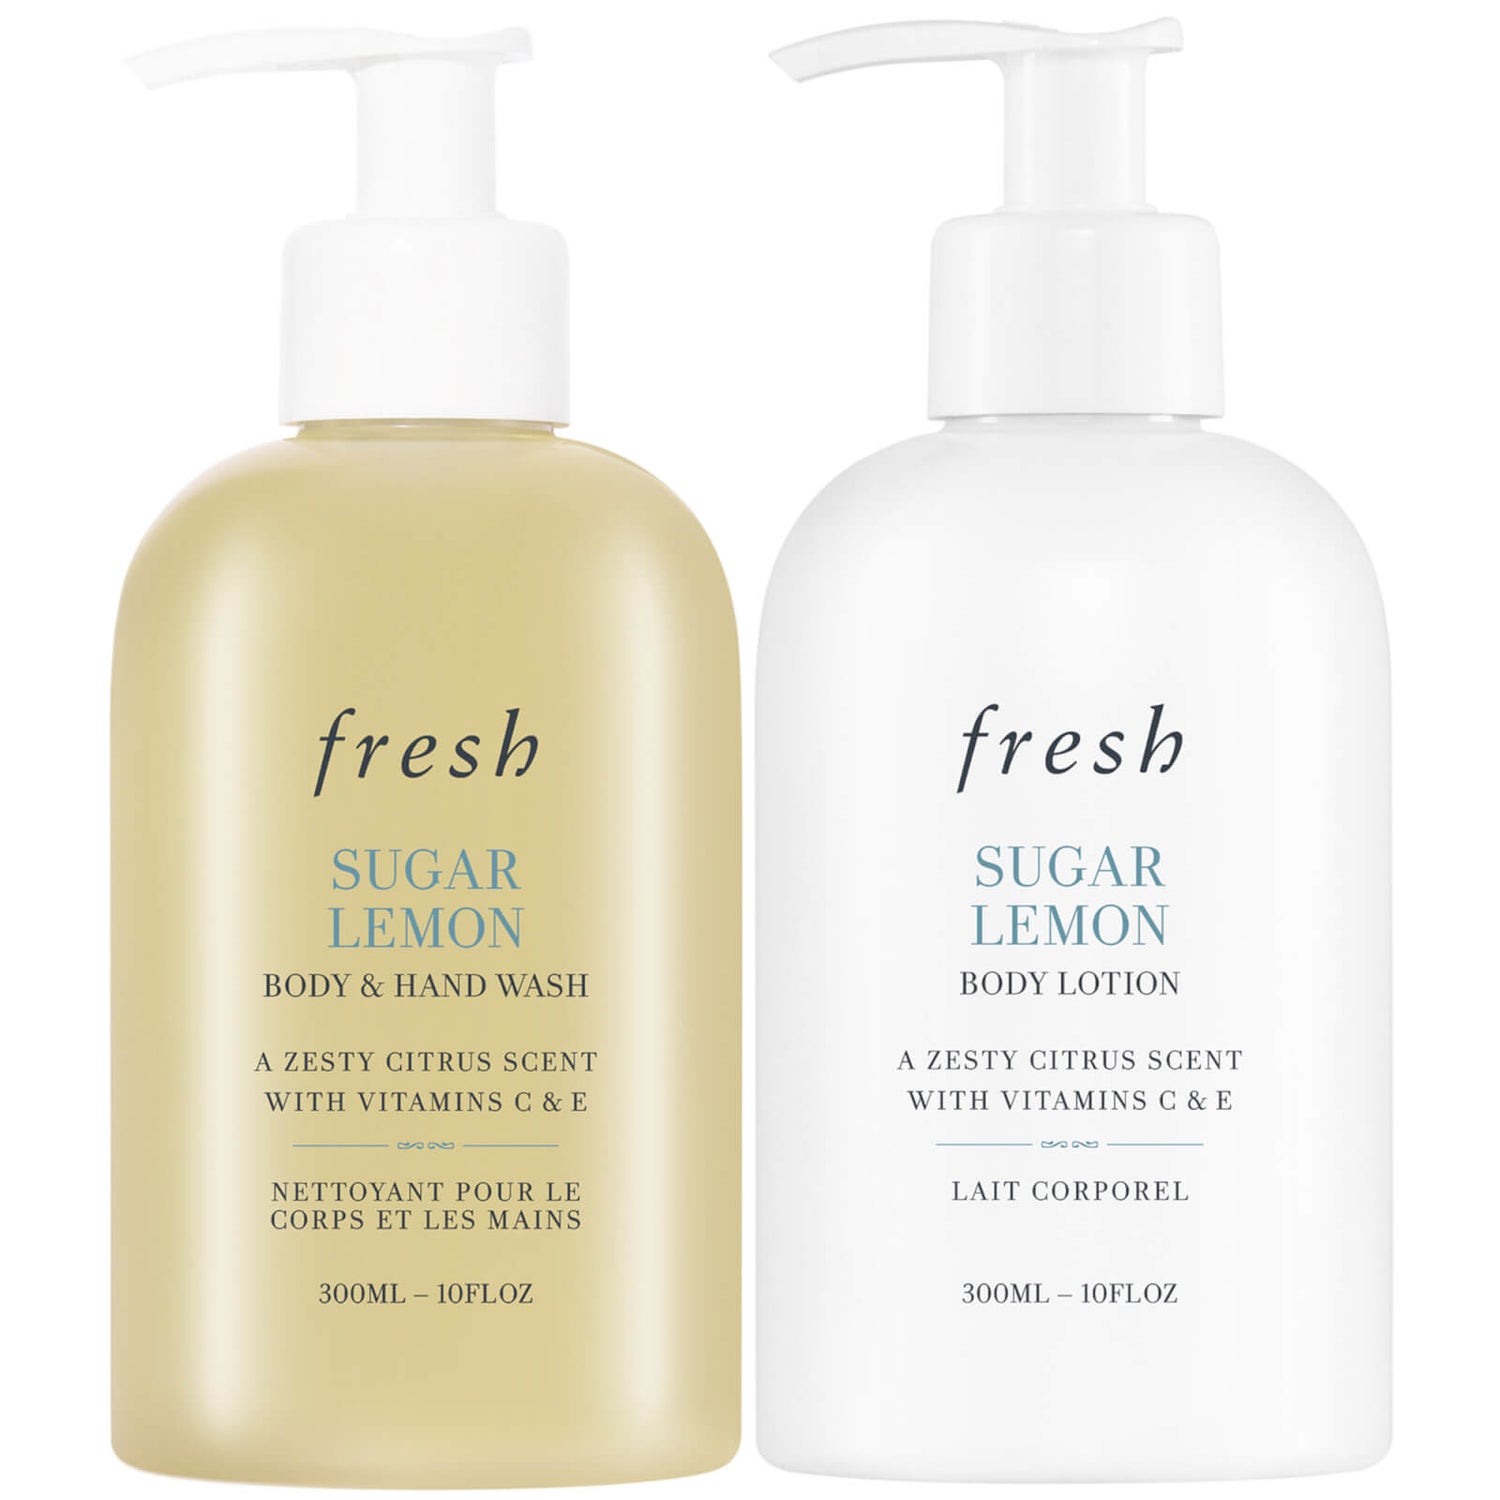 Fresh Sugar Lemon Body Lotion and Body and Hand Wash 300ml Duo (Worth £51.00)